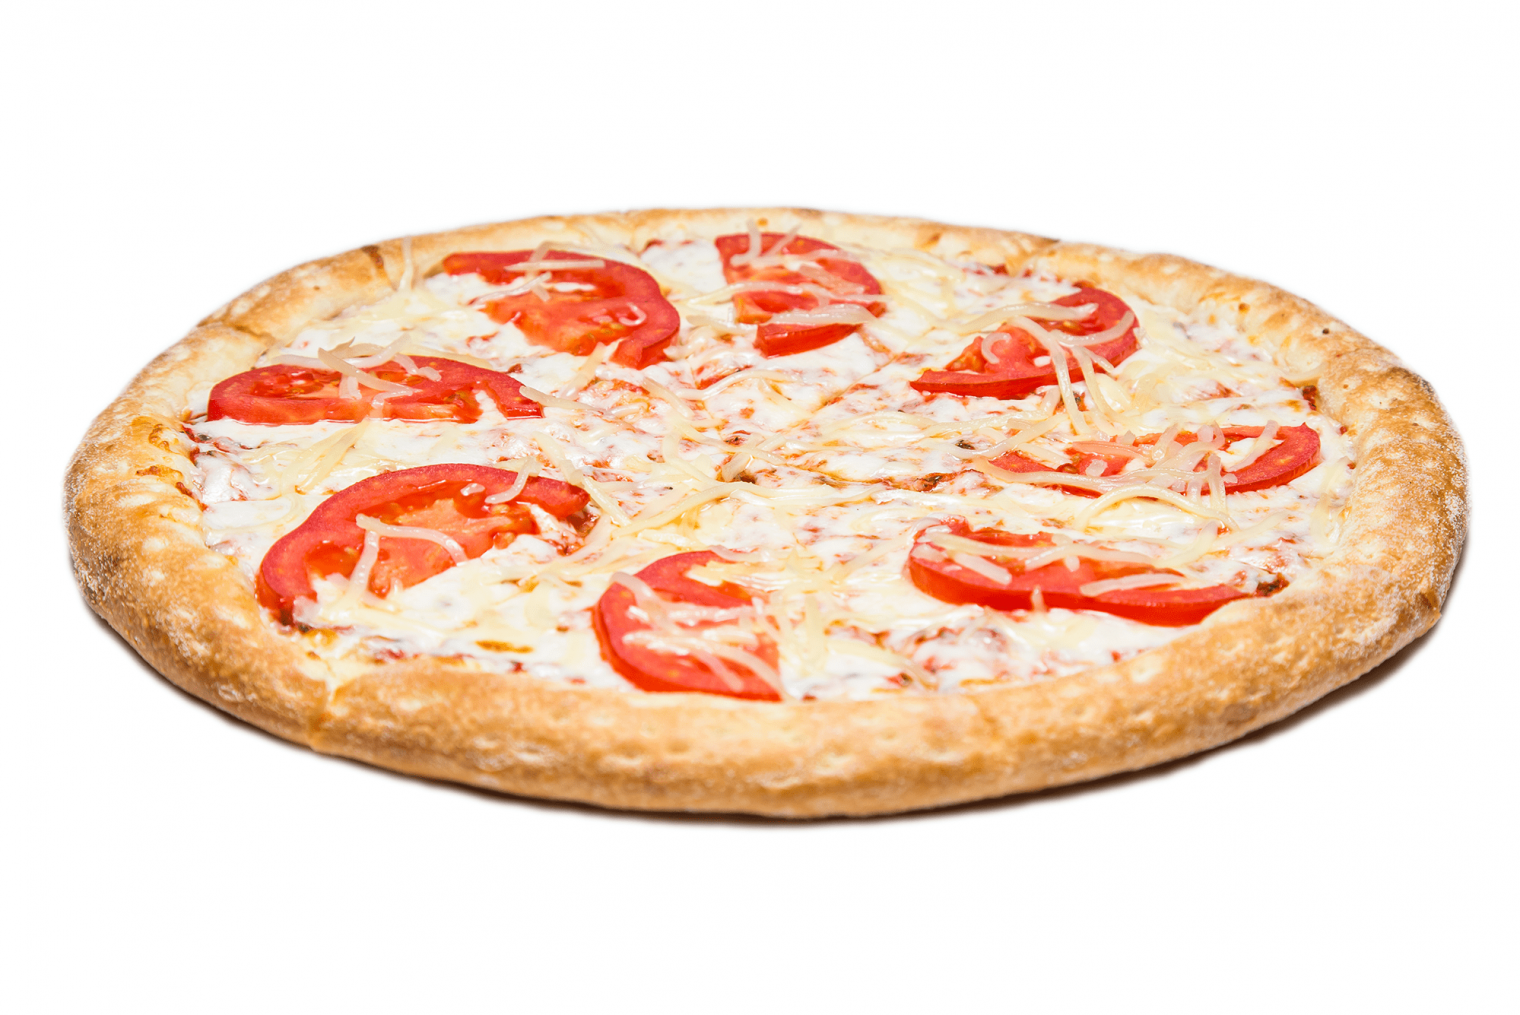 технологическая карта пицца маргарита 40 см фото 77